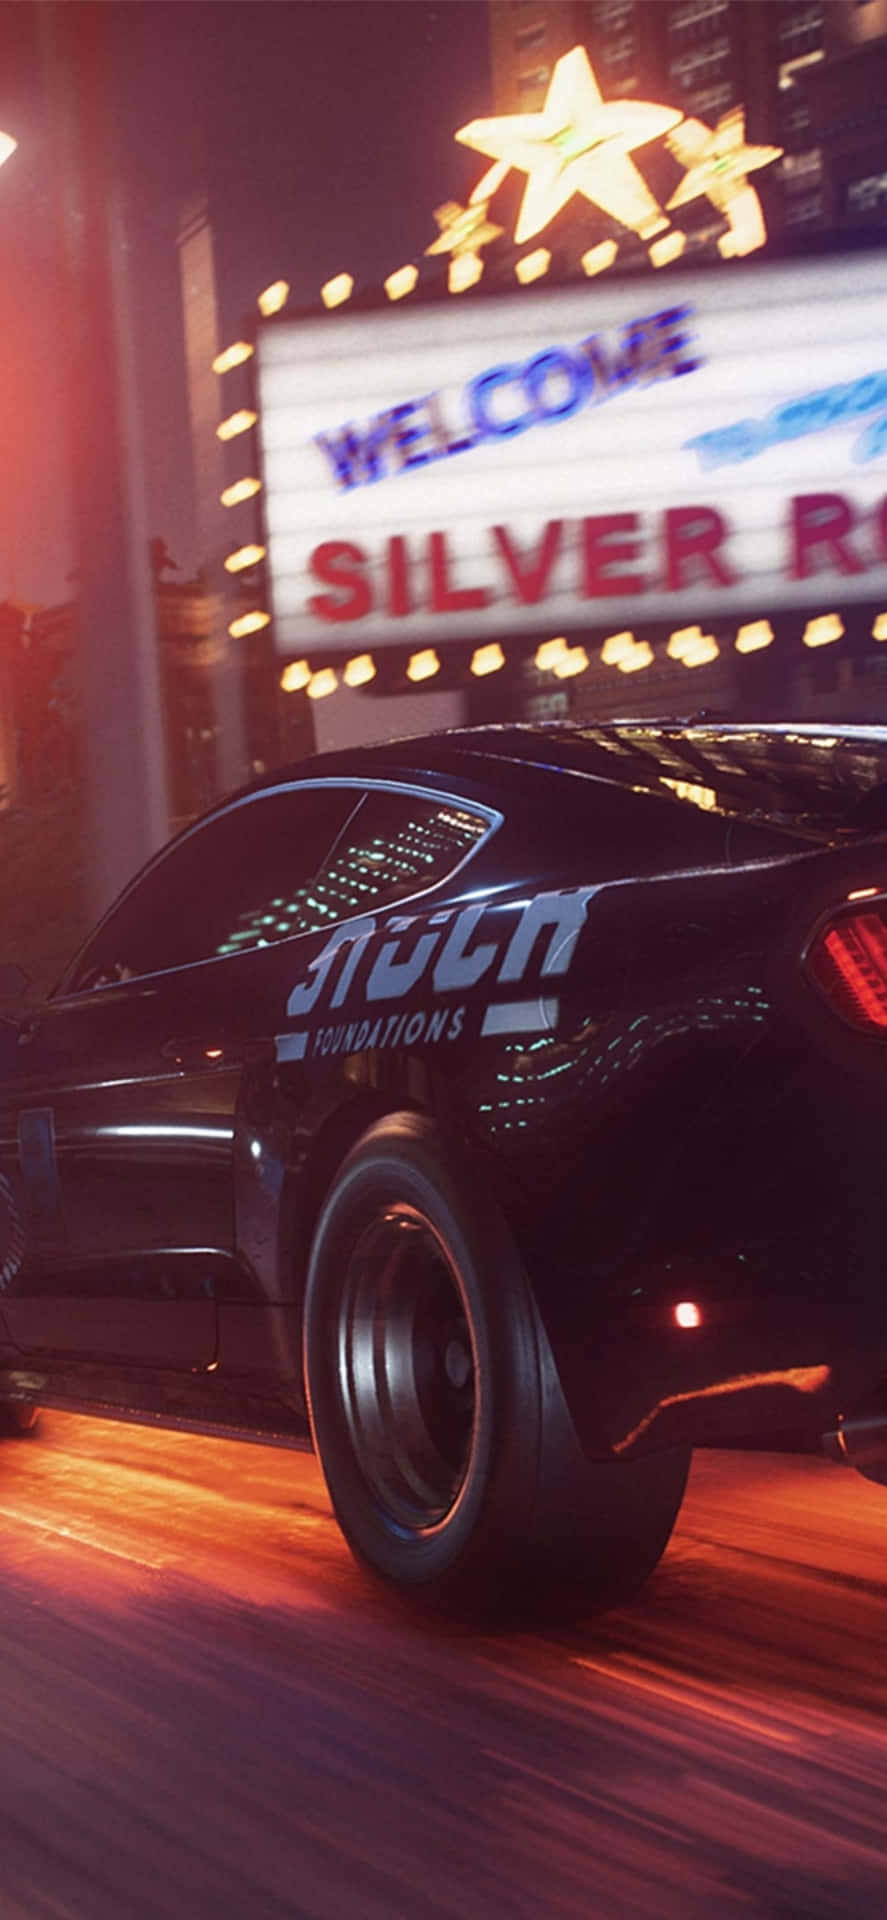 Sfondoper Iphone Xs Di Need For Speed Payback Con Una Ford Mustang Nera.